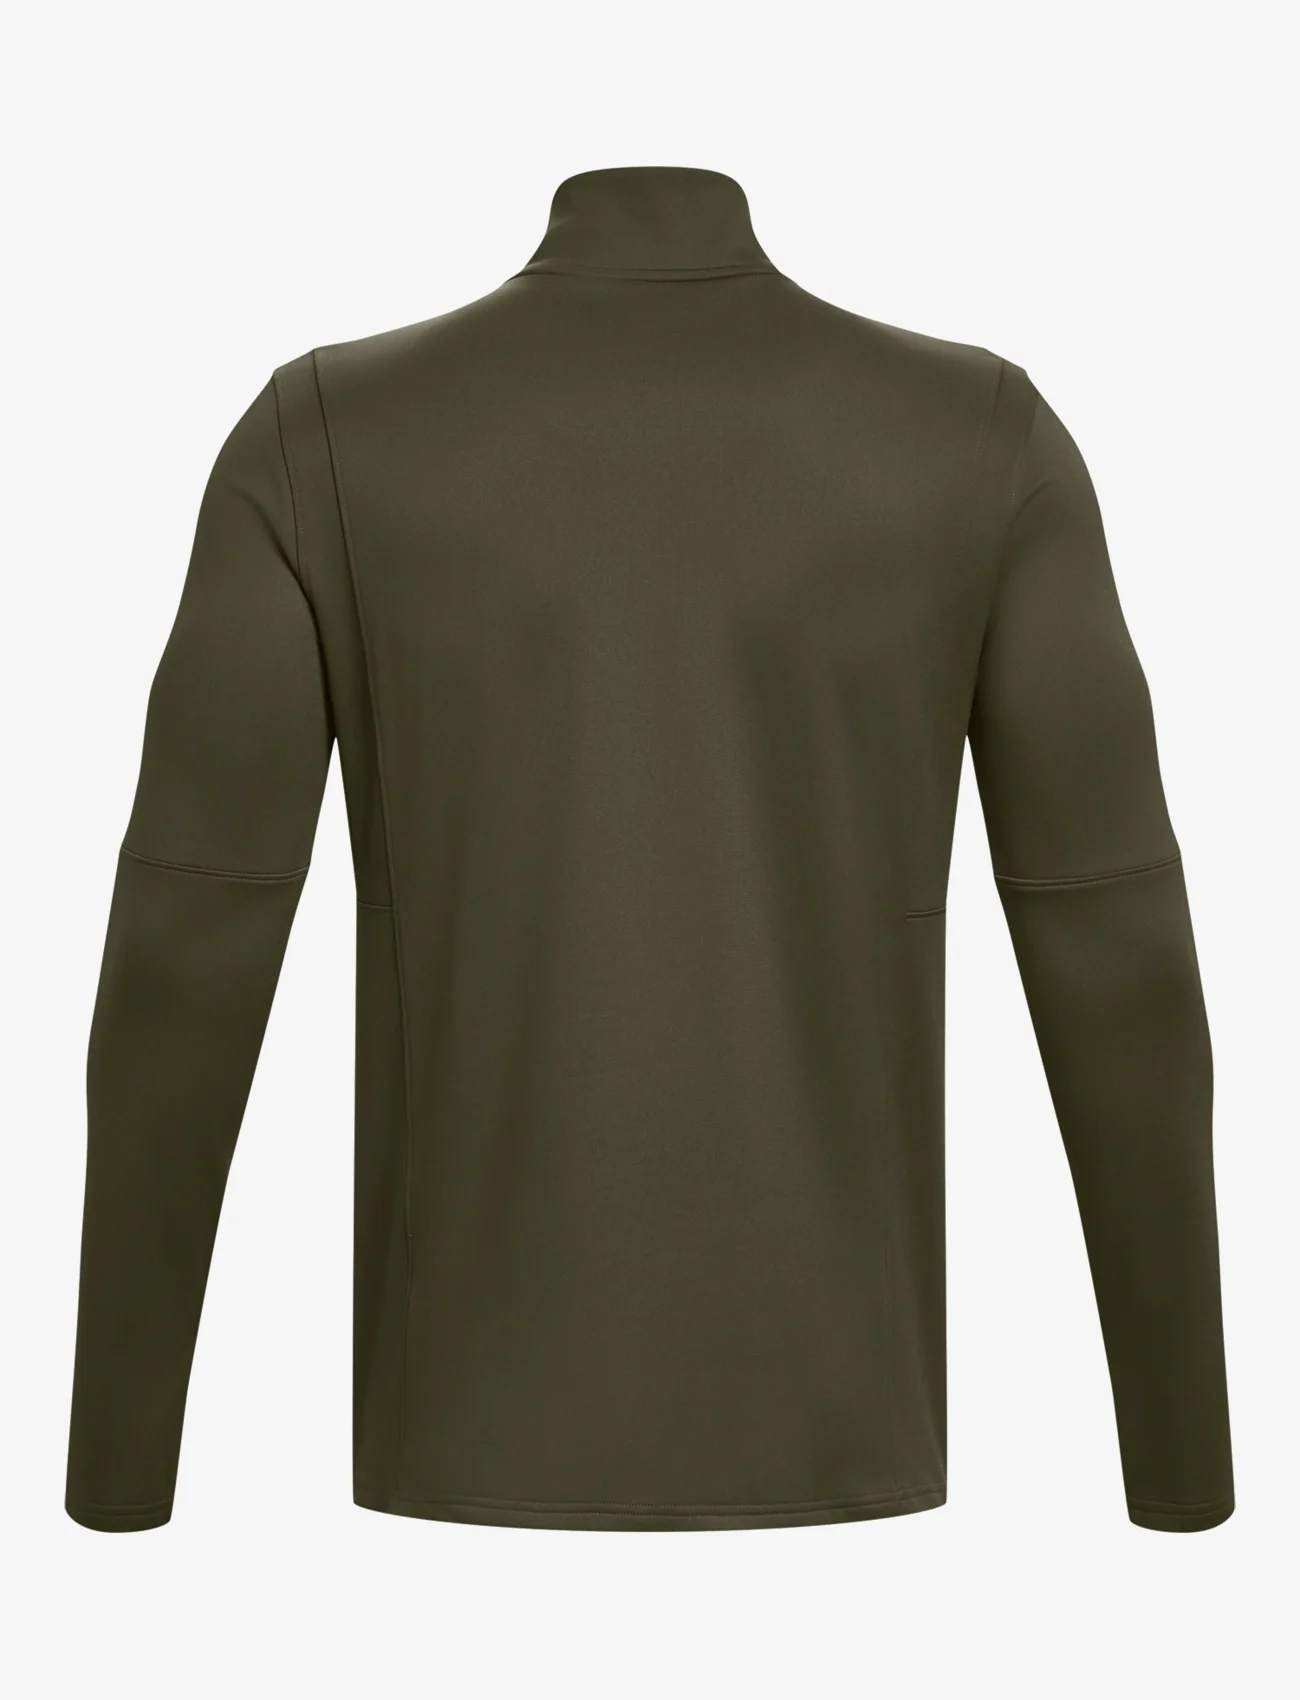 Under Armour - UA M's Ch. Midlayer - sweatshirts - marine od green - 1